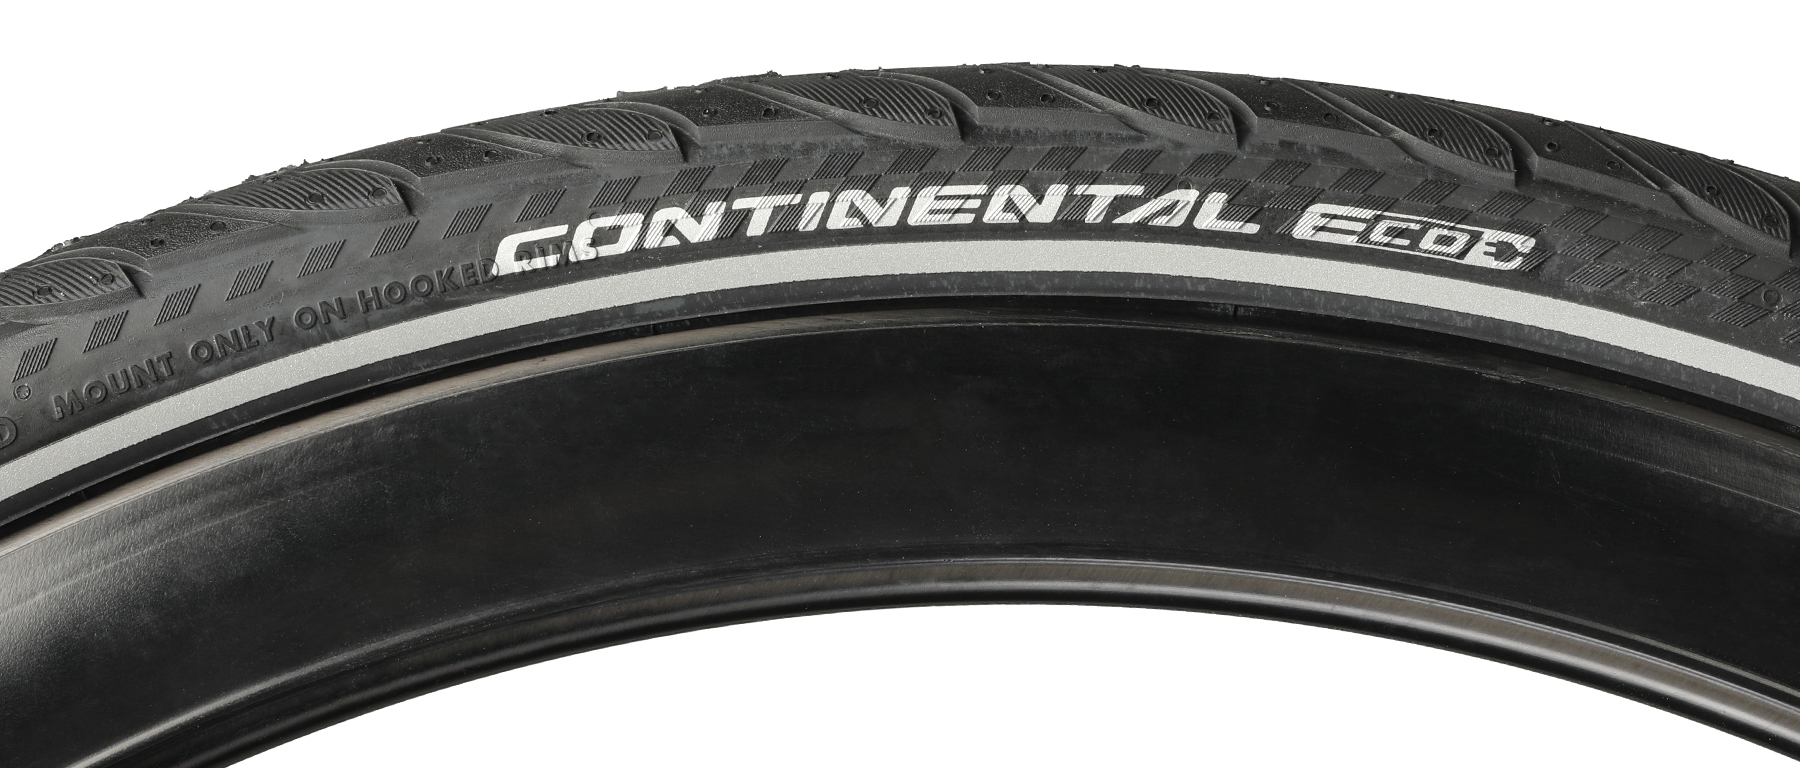 Continental Top Contact II Road Tire